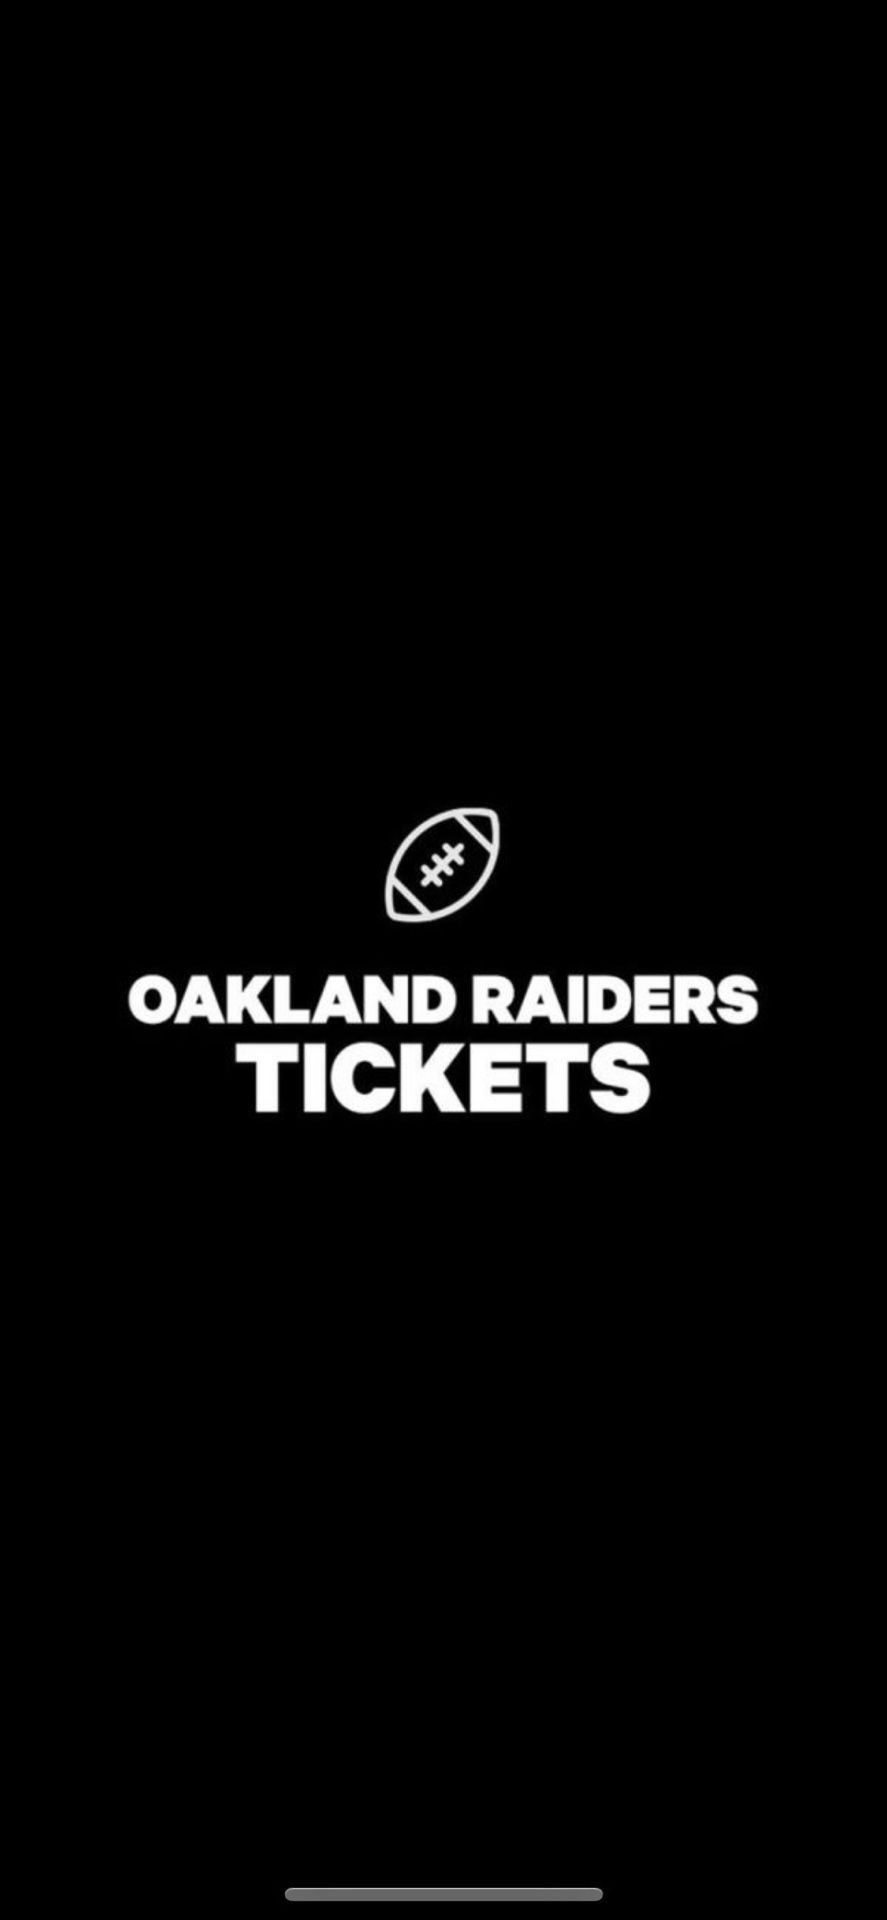 Raiders vs Denver opener tickets